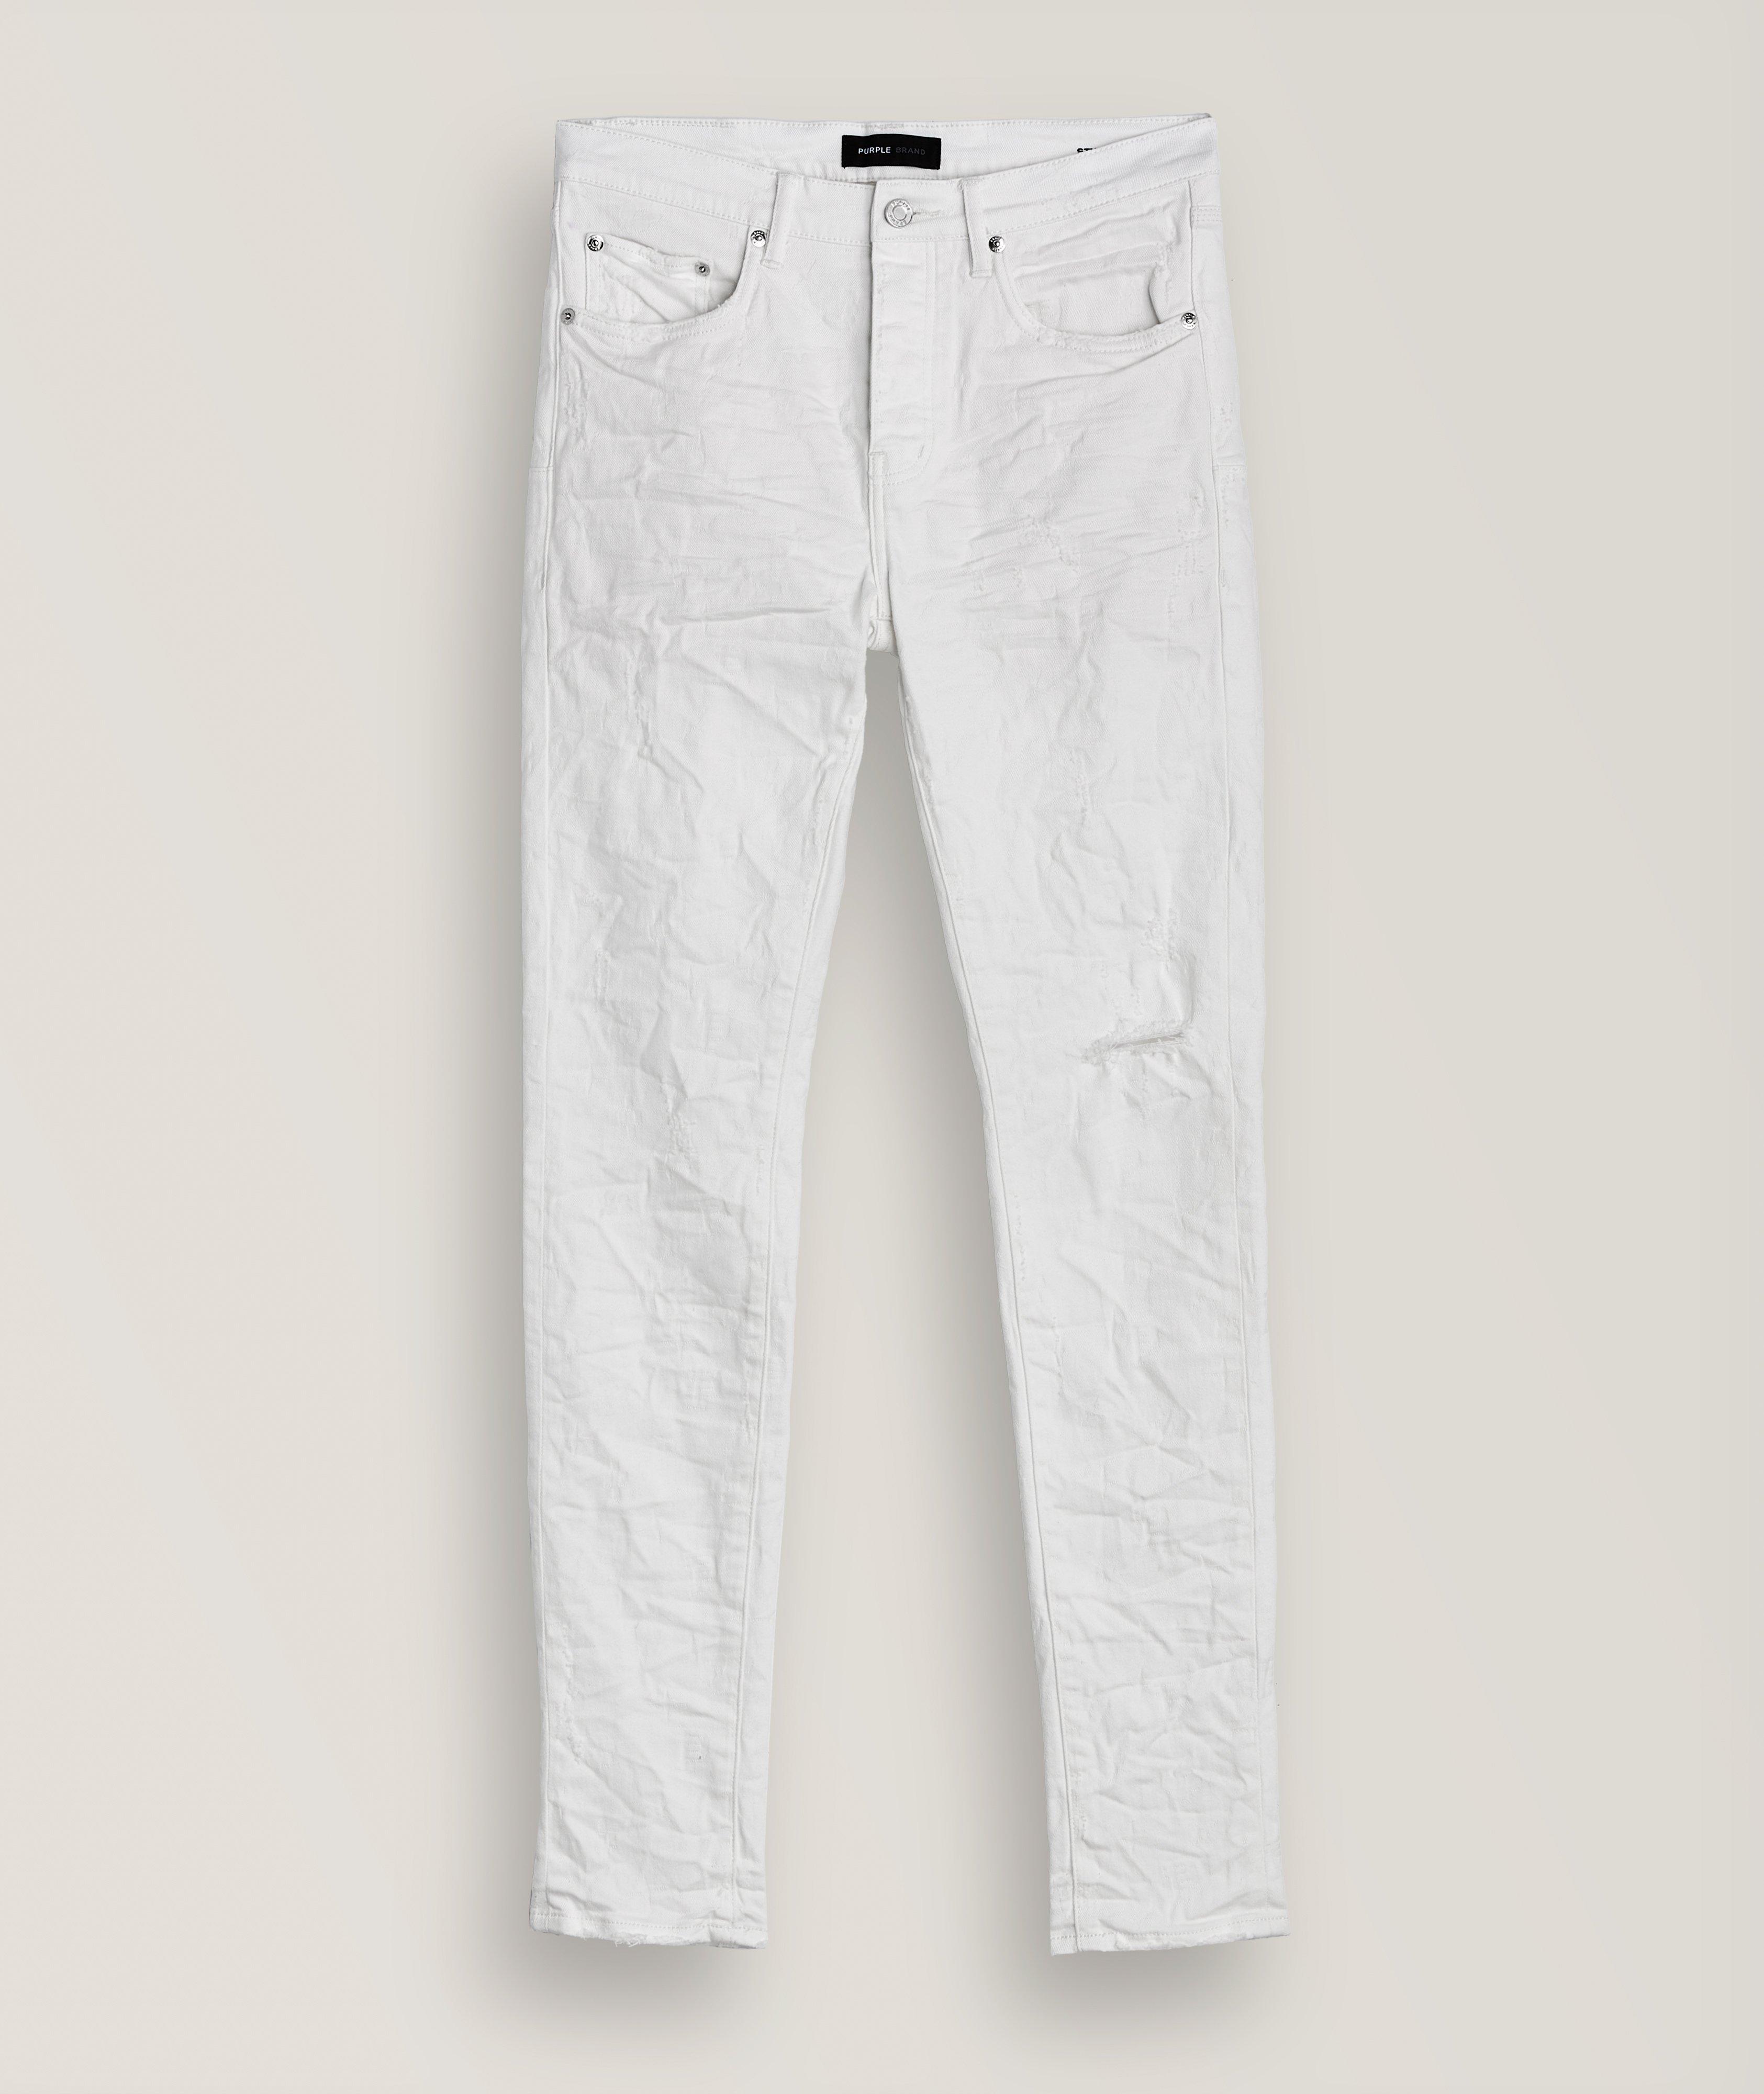 P001 Tonal Jacquard Stretch-Cotton Jeans image 0